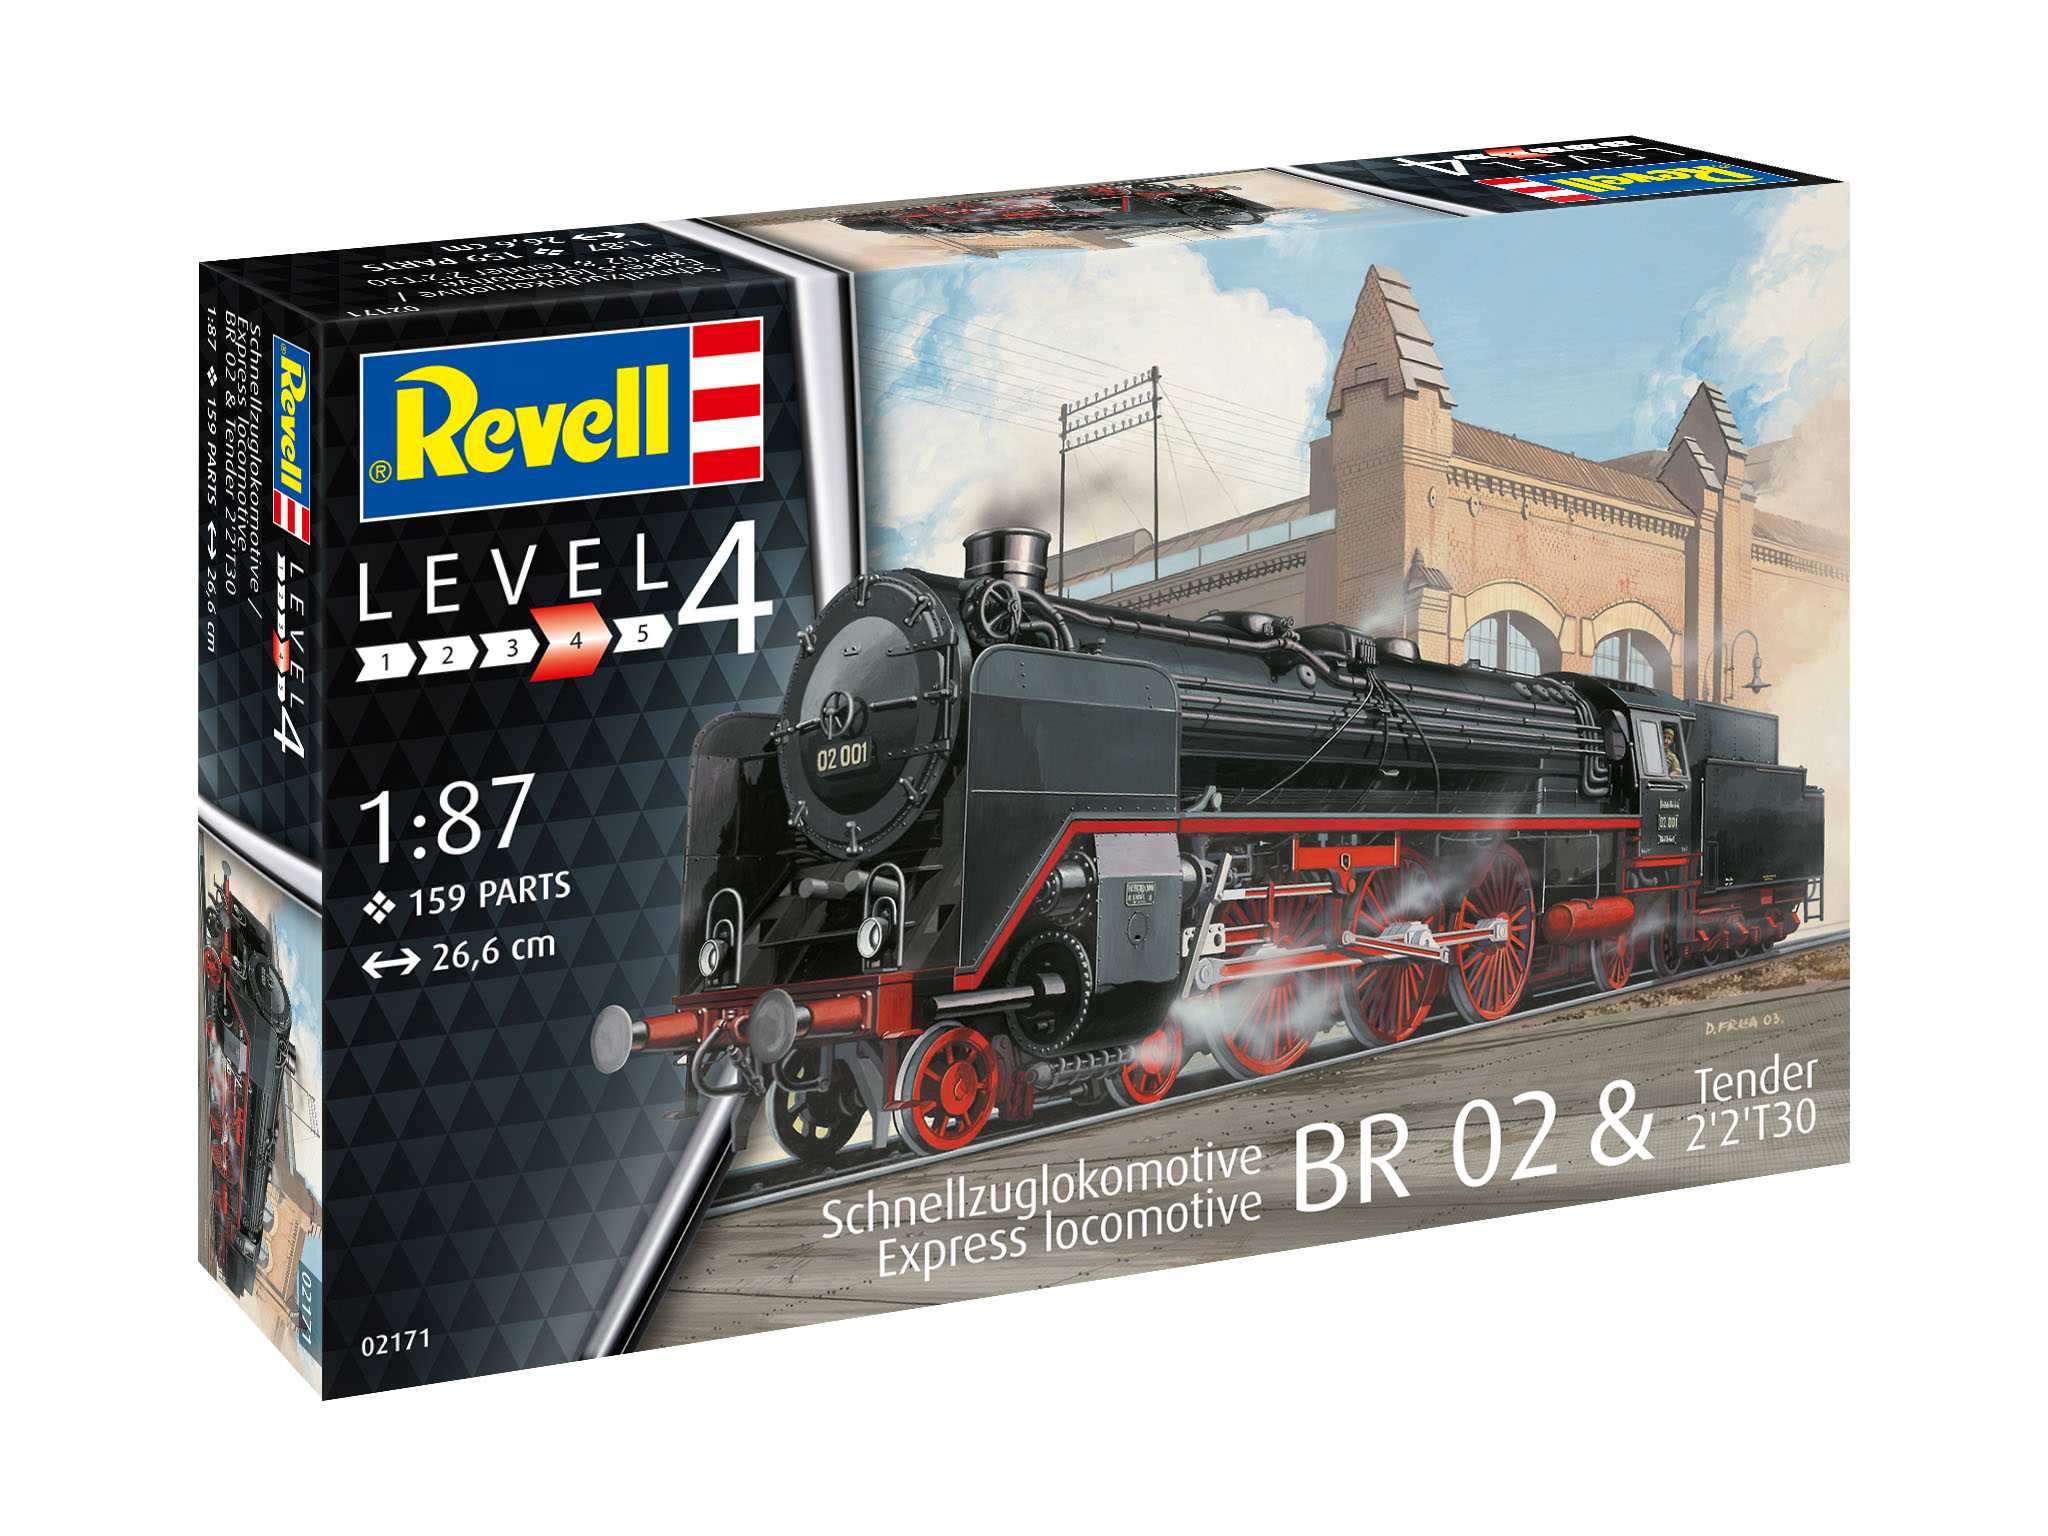 Revell 02171 - Express locomotive BR 02 Tender 2´2´T30 (1:87)